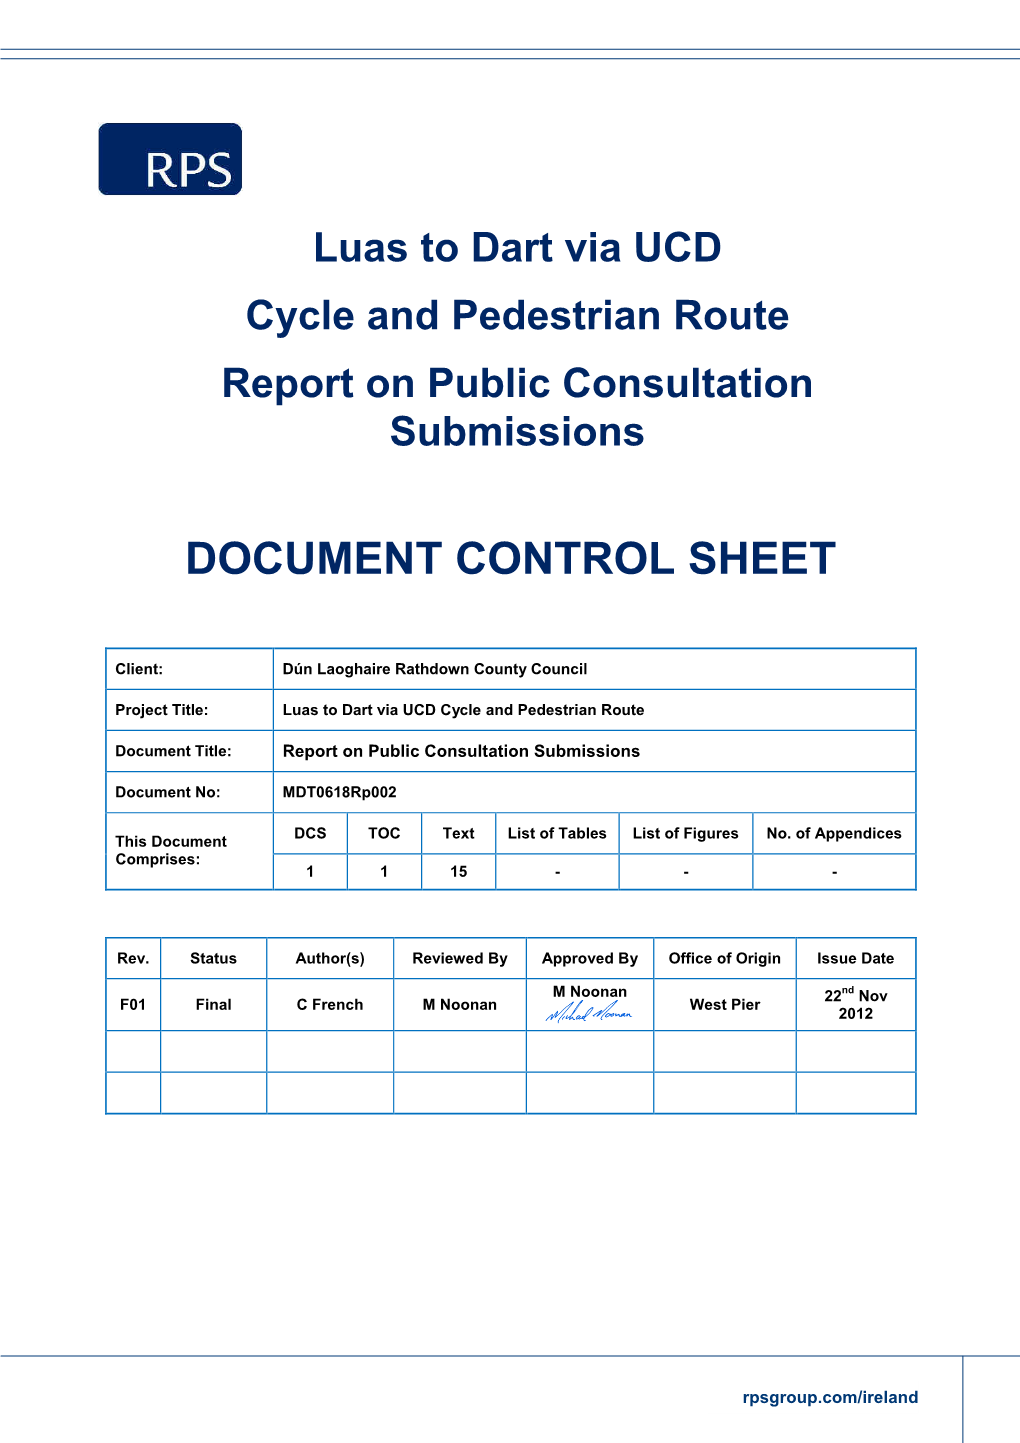 Luas to Dart Via UCD – Post Public Consultation Report